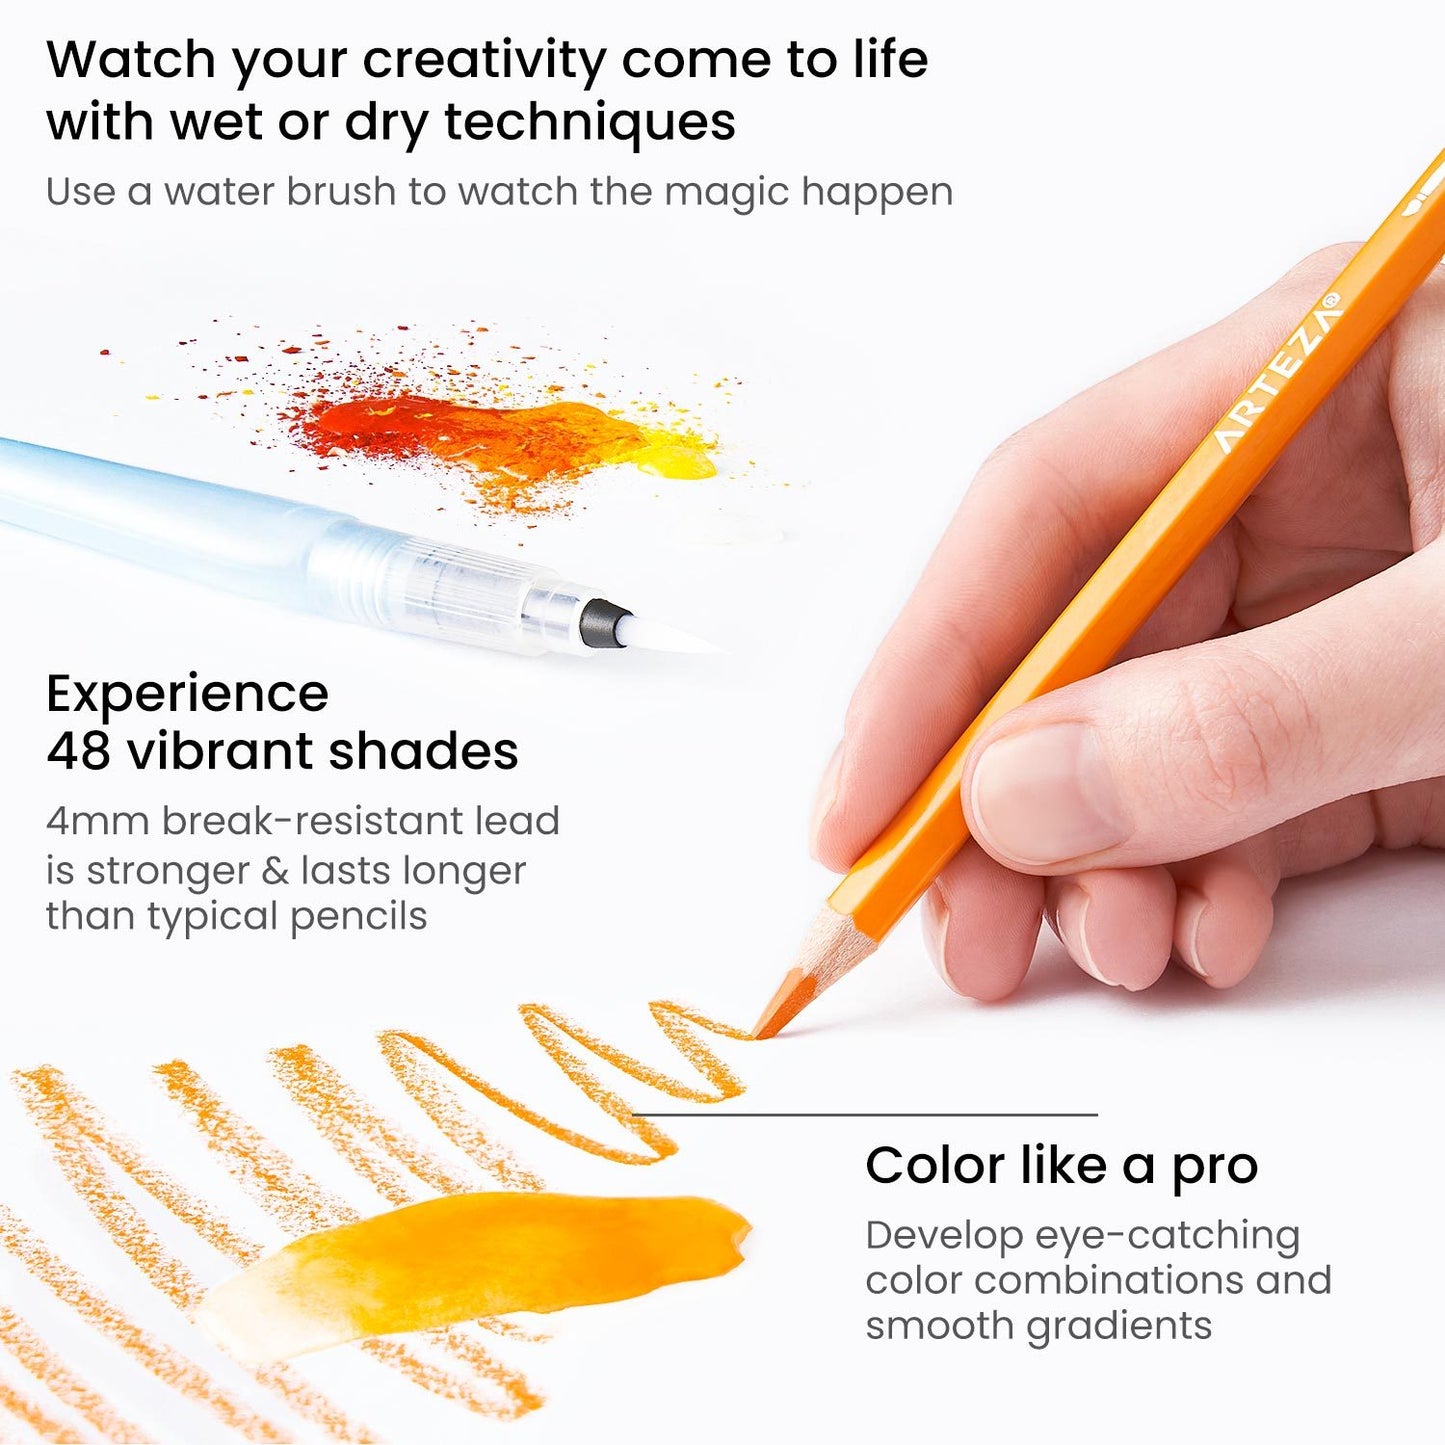 Expert Watercolor Pencils - Set of 48